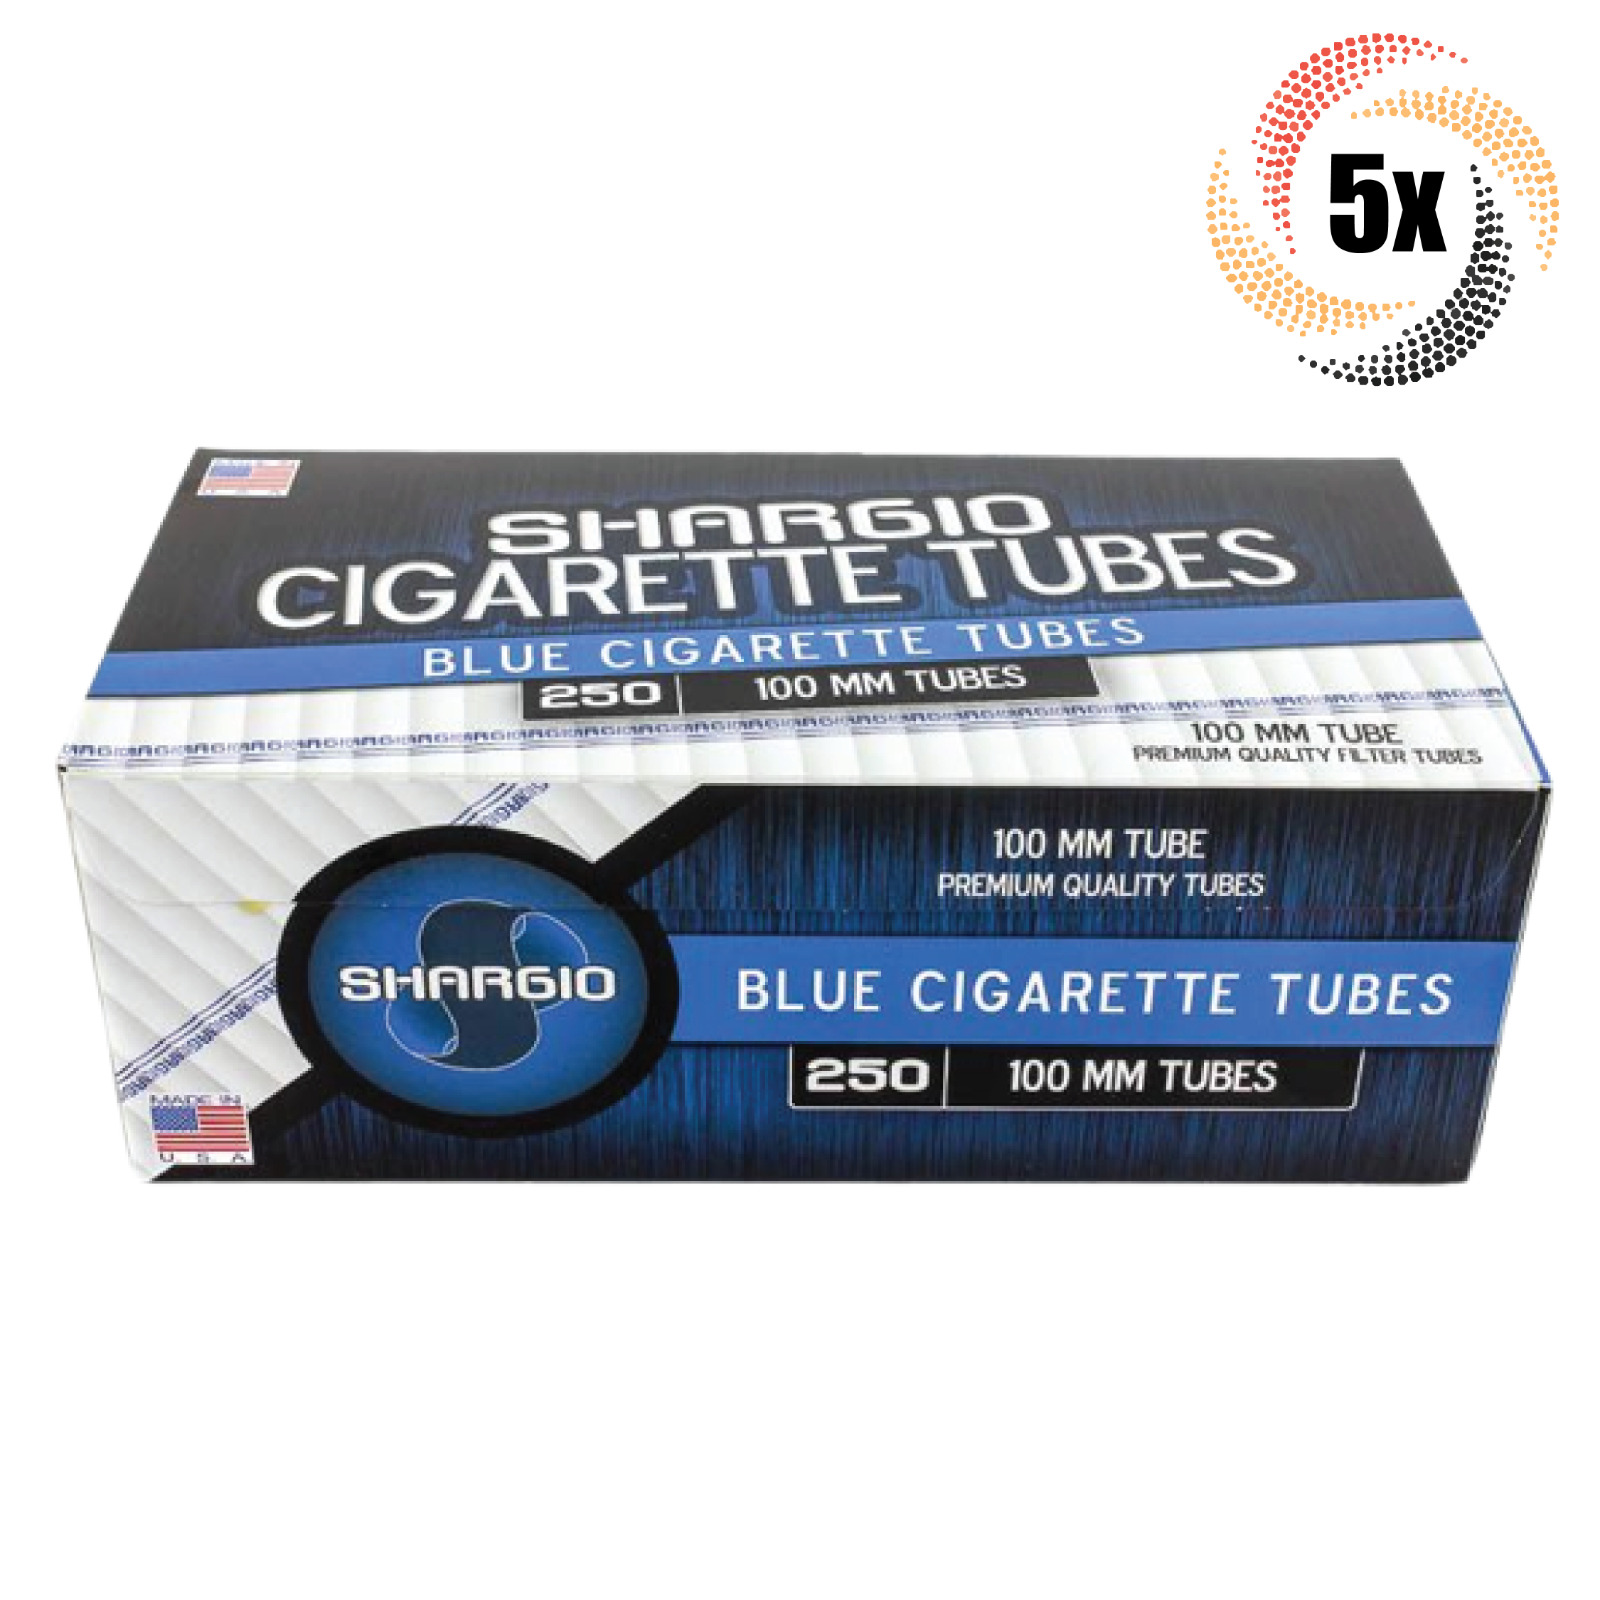 5x Boxes Shargio Blue Light 100MM 100's ( 1,250 Tubes ) Cigarette Tobacco RYO